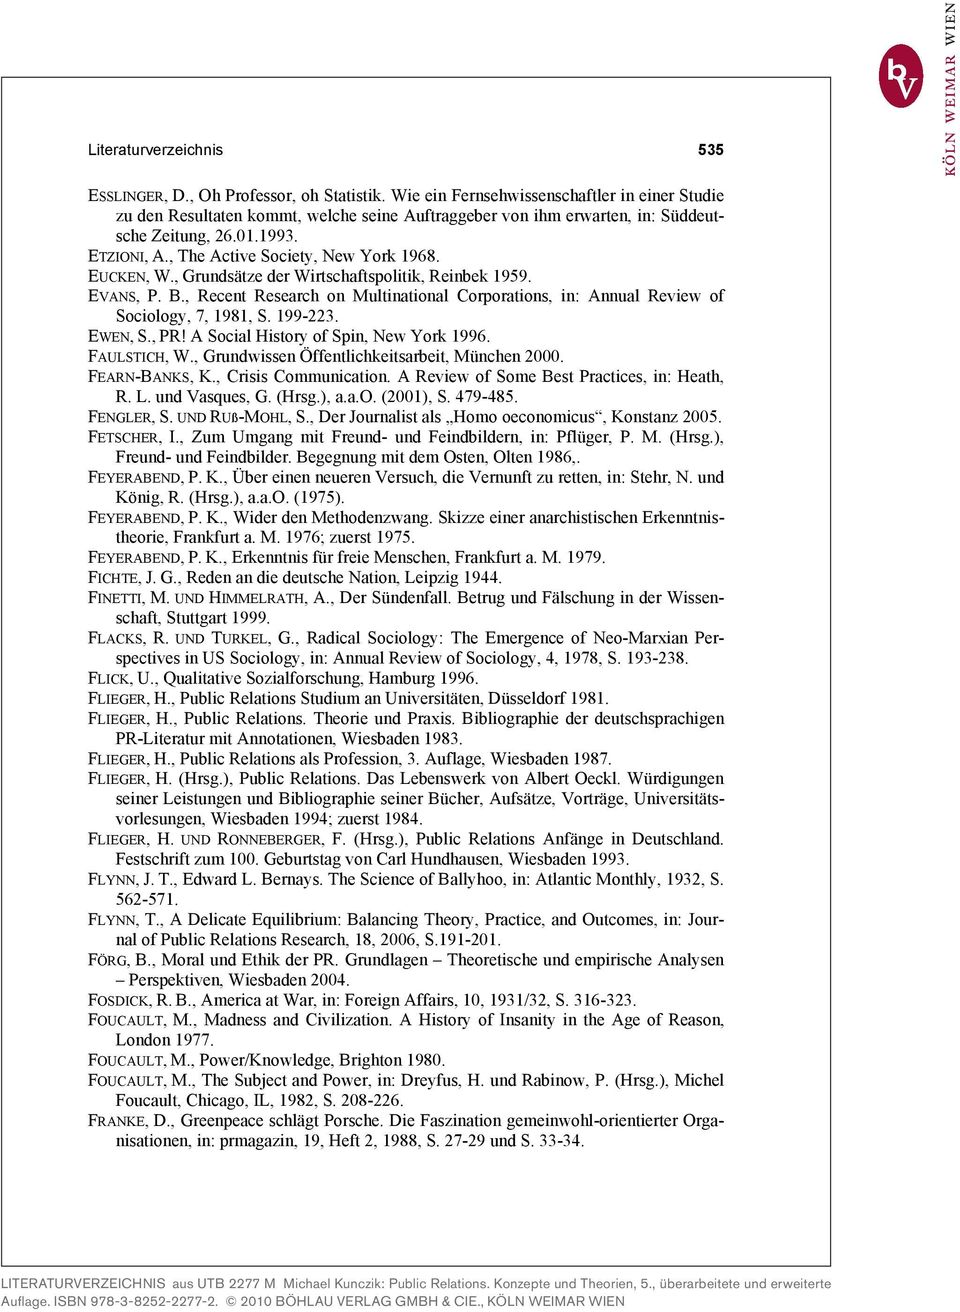 EUCKEN, W., Grundsätze der Wirtschaftspolitik, Reinbek 1959. EVANS, P. B., Recent Research on Multinational Corporations, in: Annual Review of Sociology, 7, 1981, S. 199-223. EWEN, S., PR!